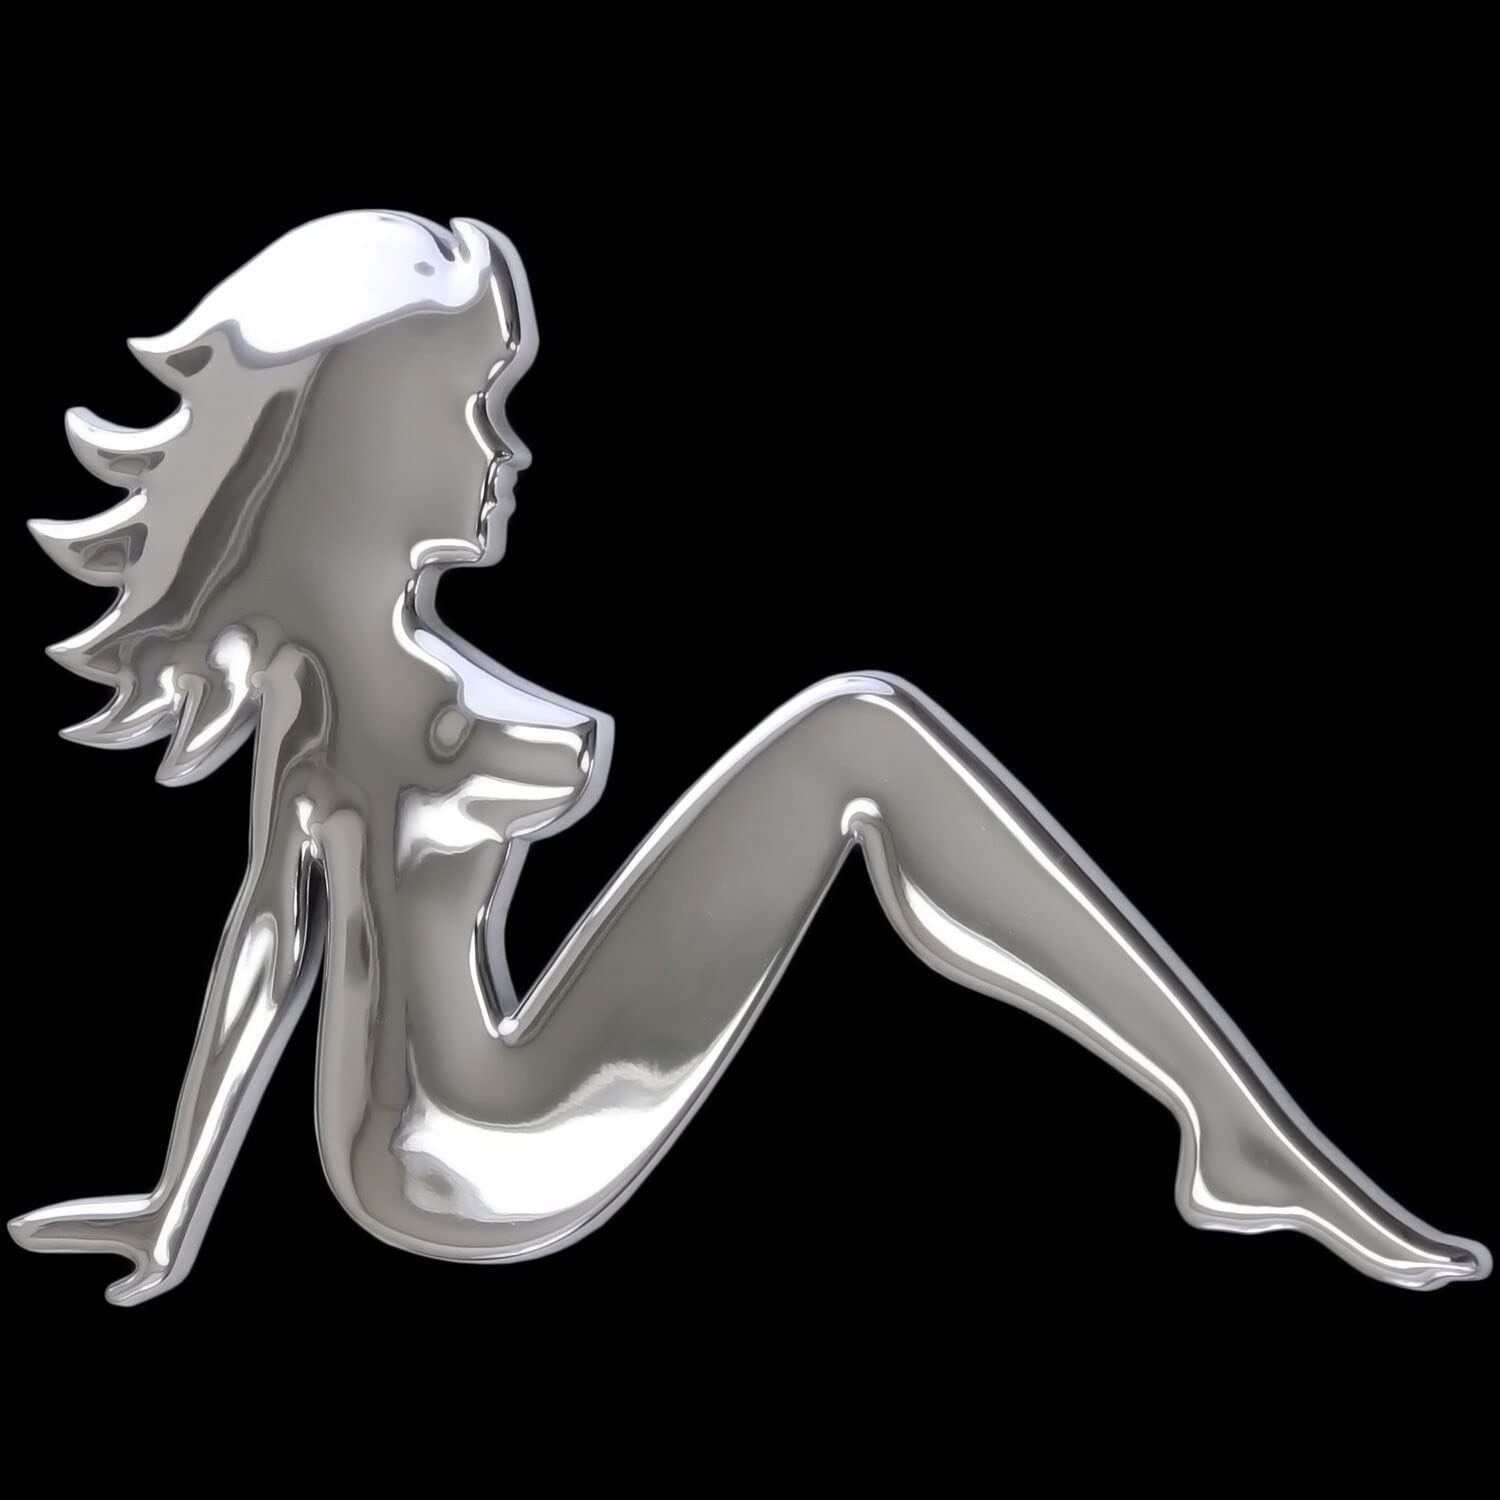 3D Chrom Emblem Aufkleber Logo sitzende Frau sexy FKK rechts Striptease Bar L018 von phil trade